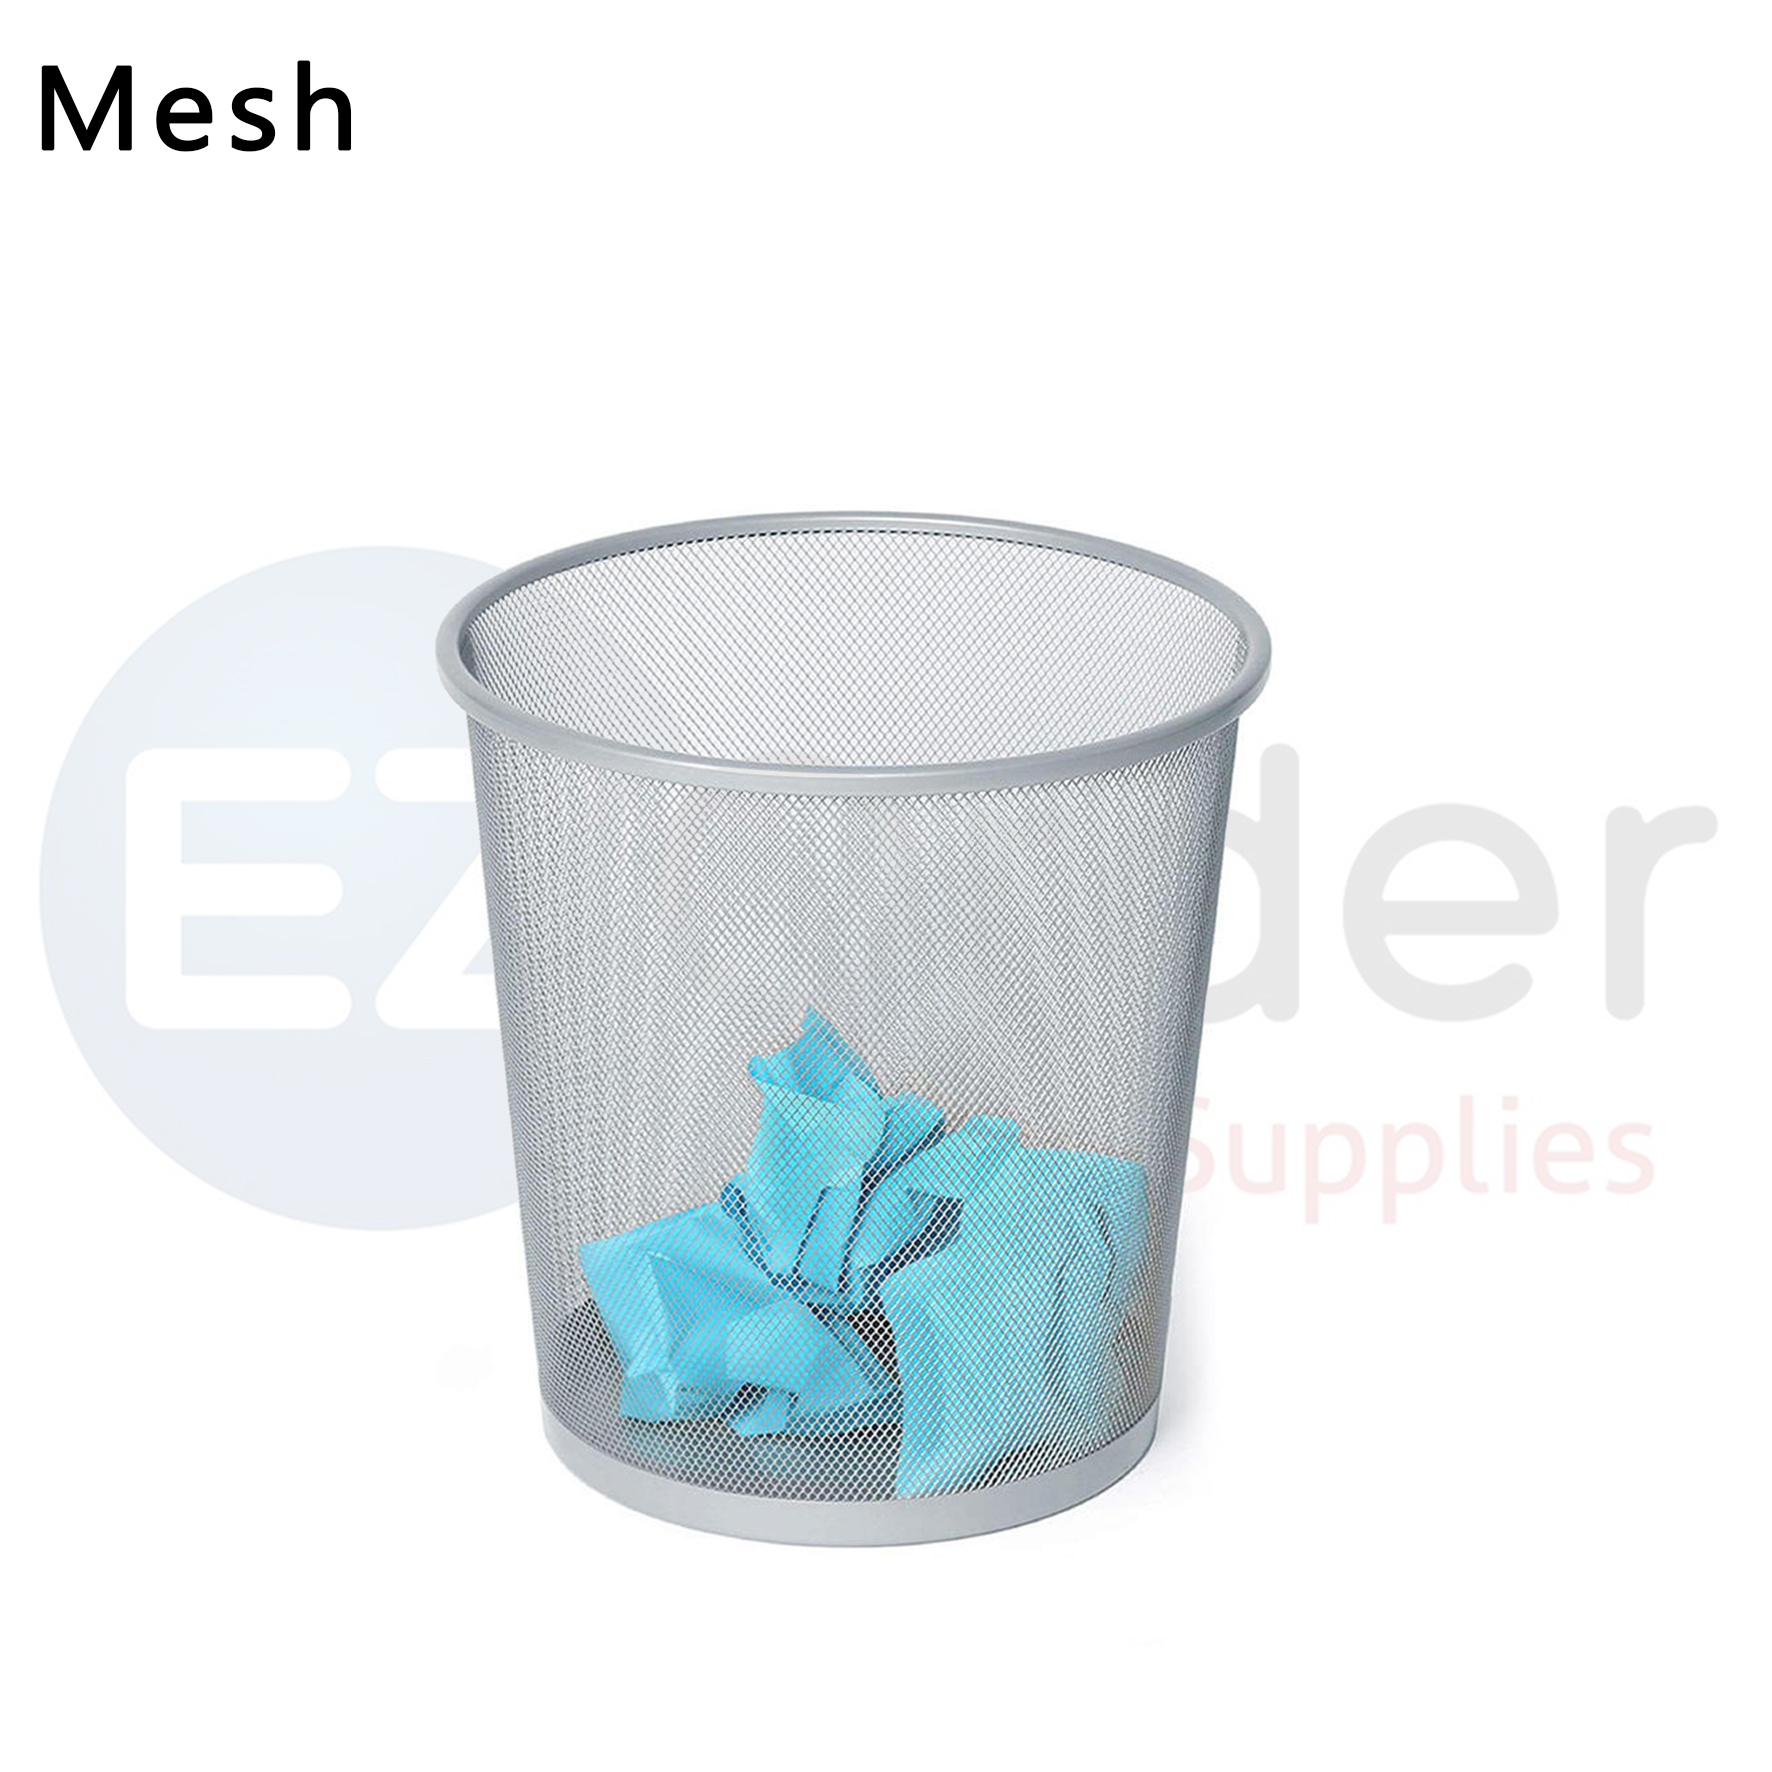 Mesh Waste basket round shape,Dia:295mm H:345mm